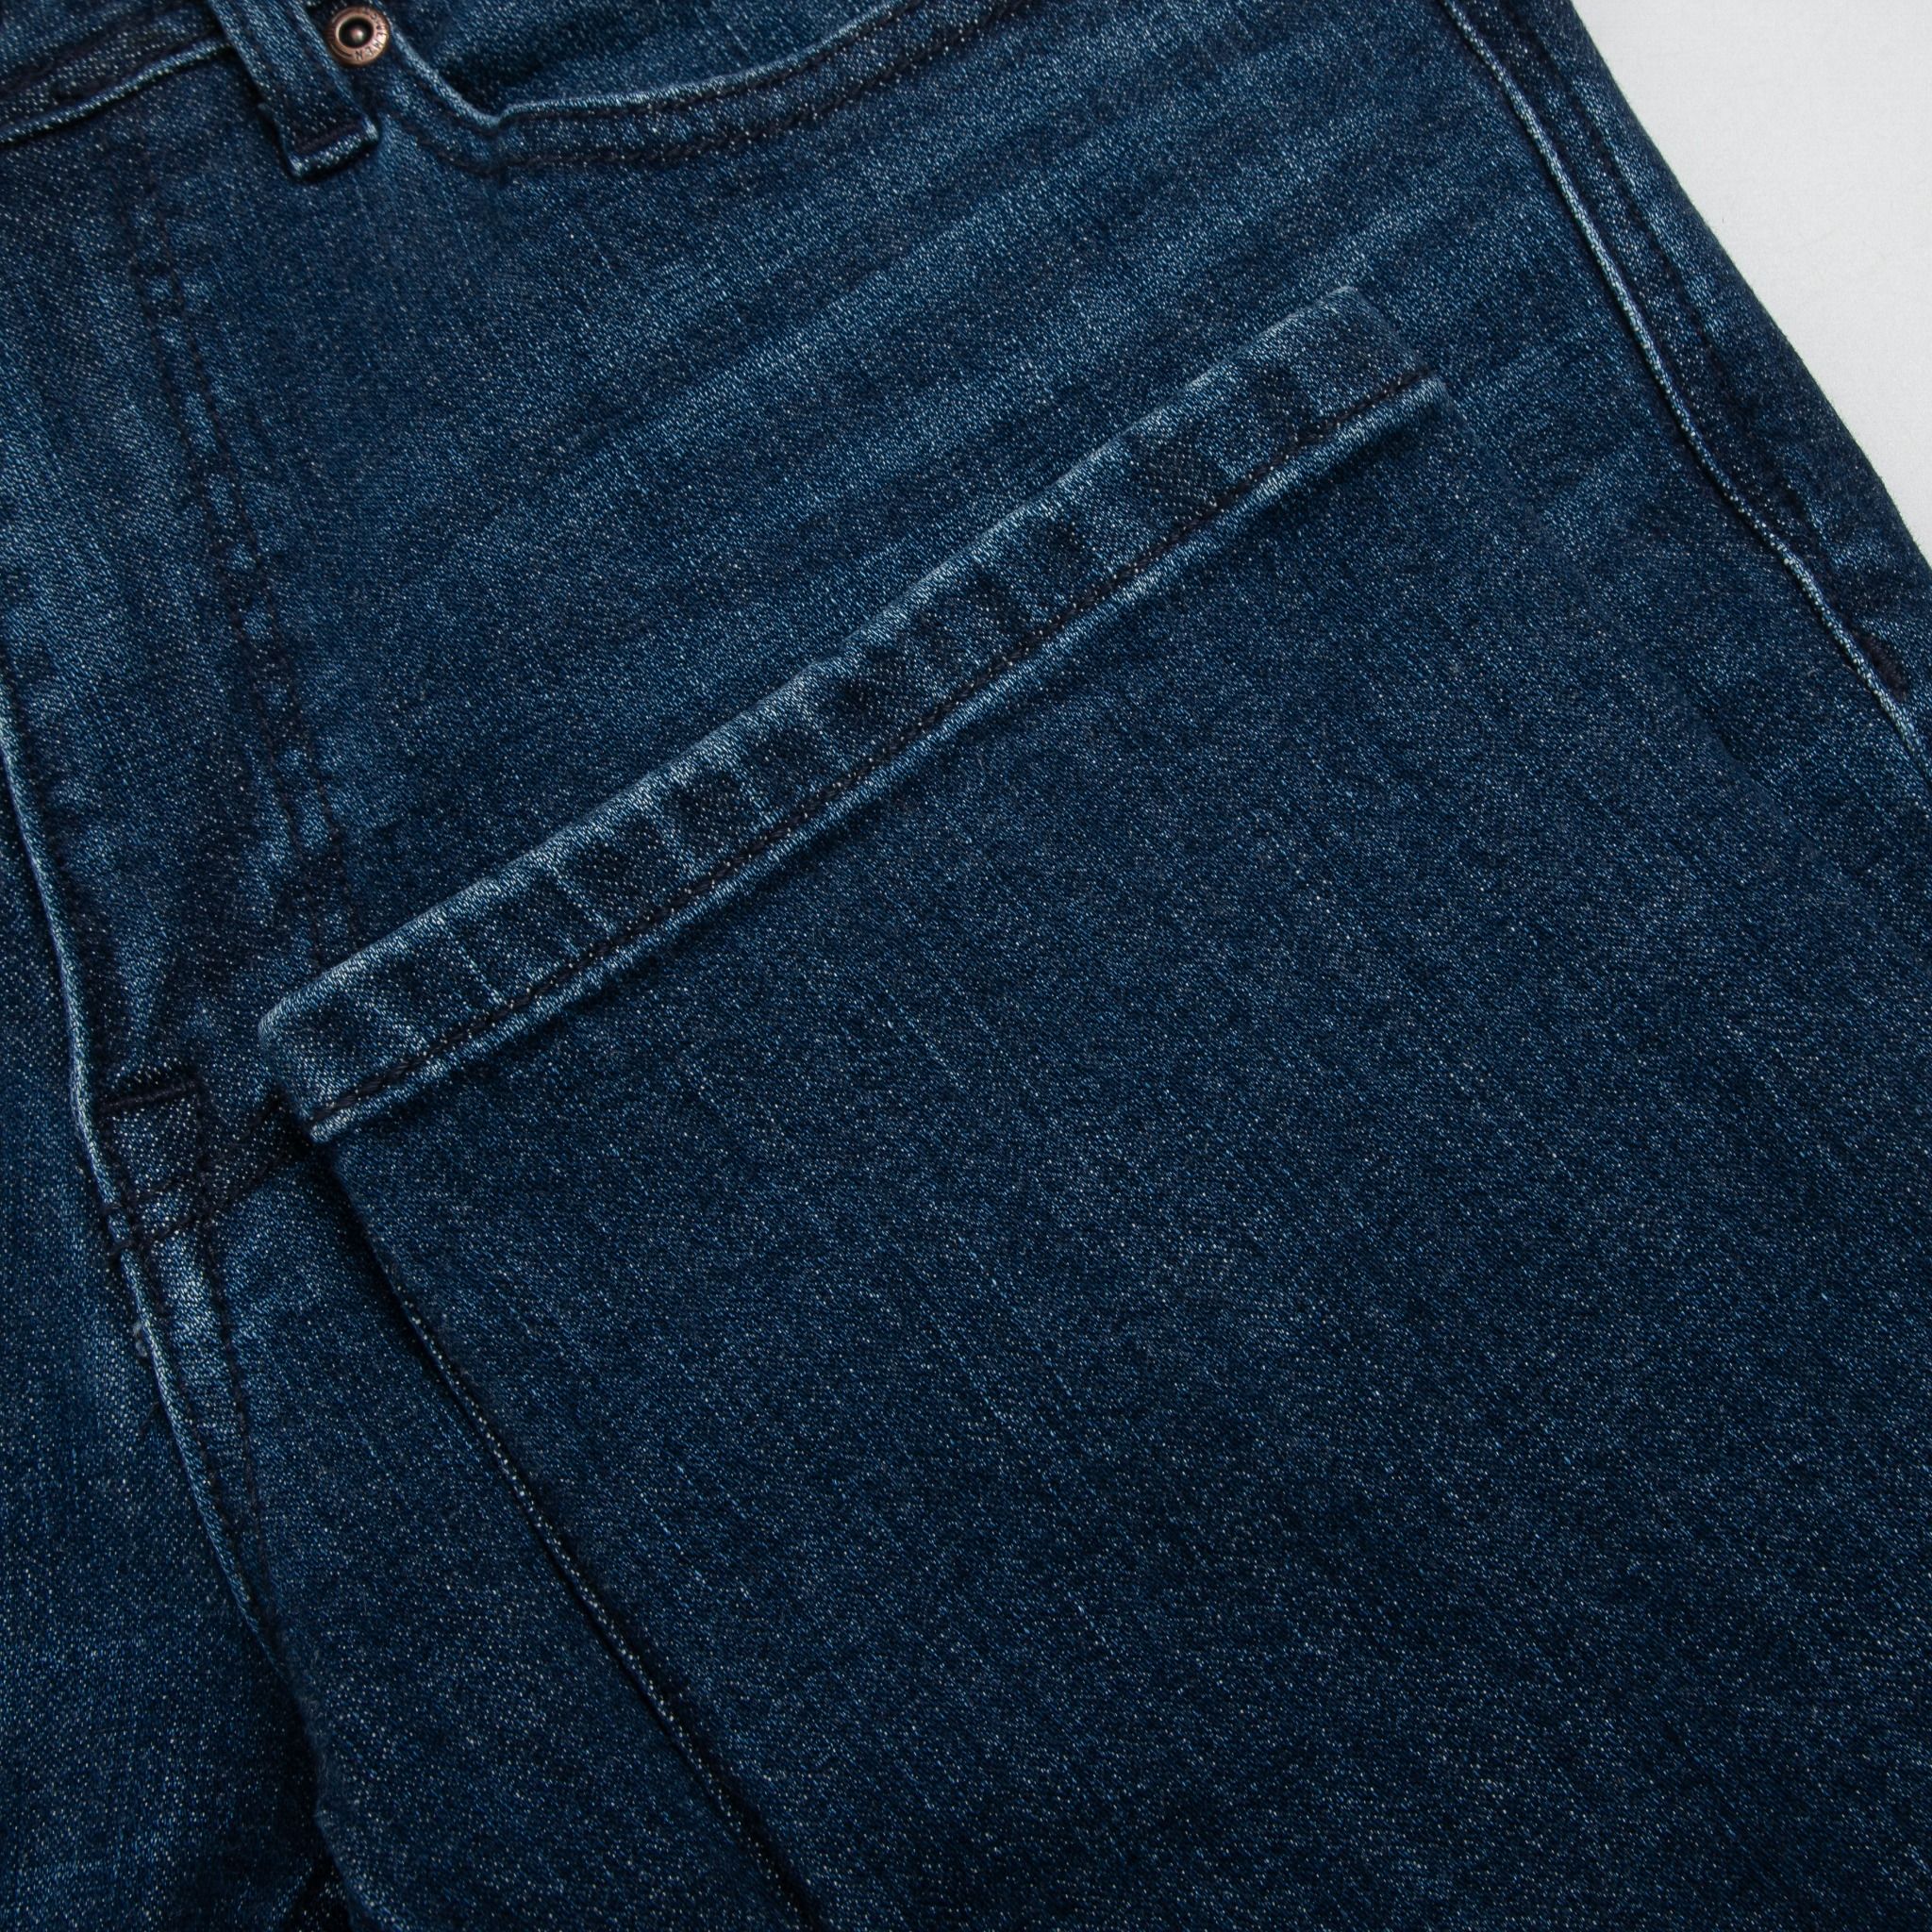  Quần Jeans Insidemen IJN05003 